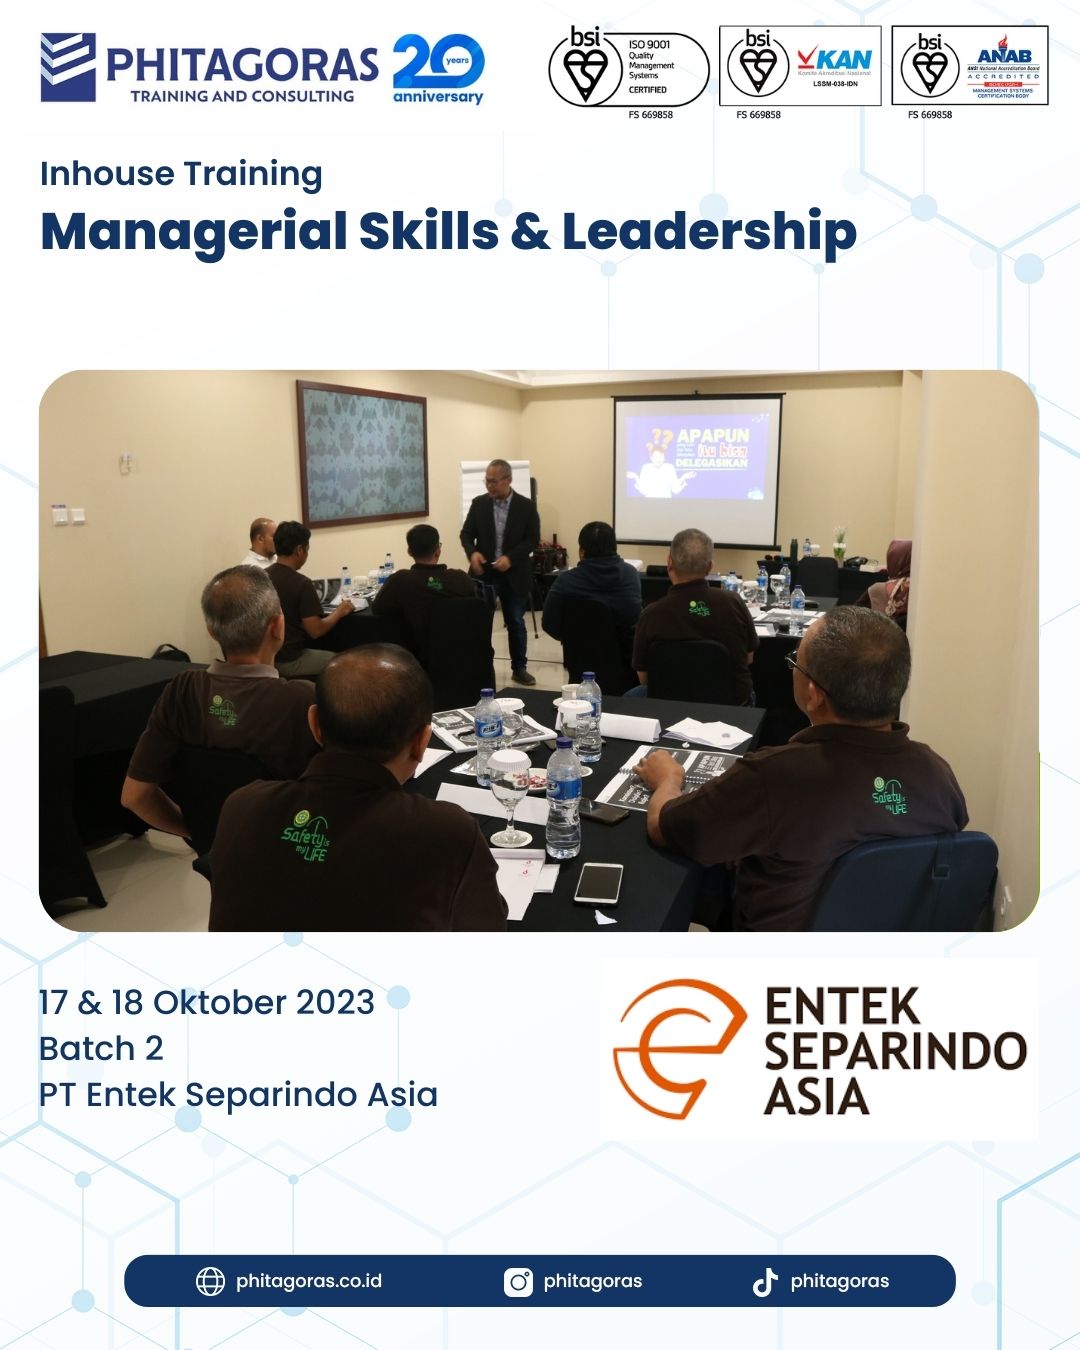 Inhouse Training Managerial Skills & Leadership - PT Entek Separindo Asia Batch 2